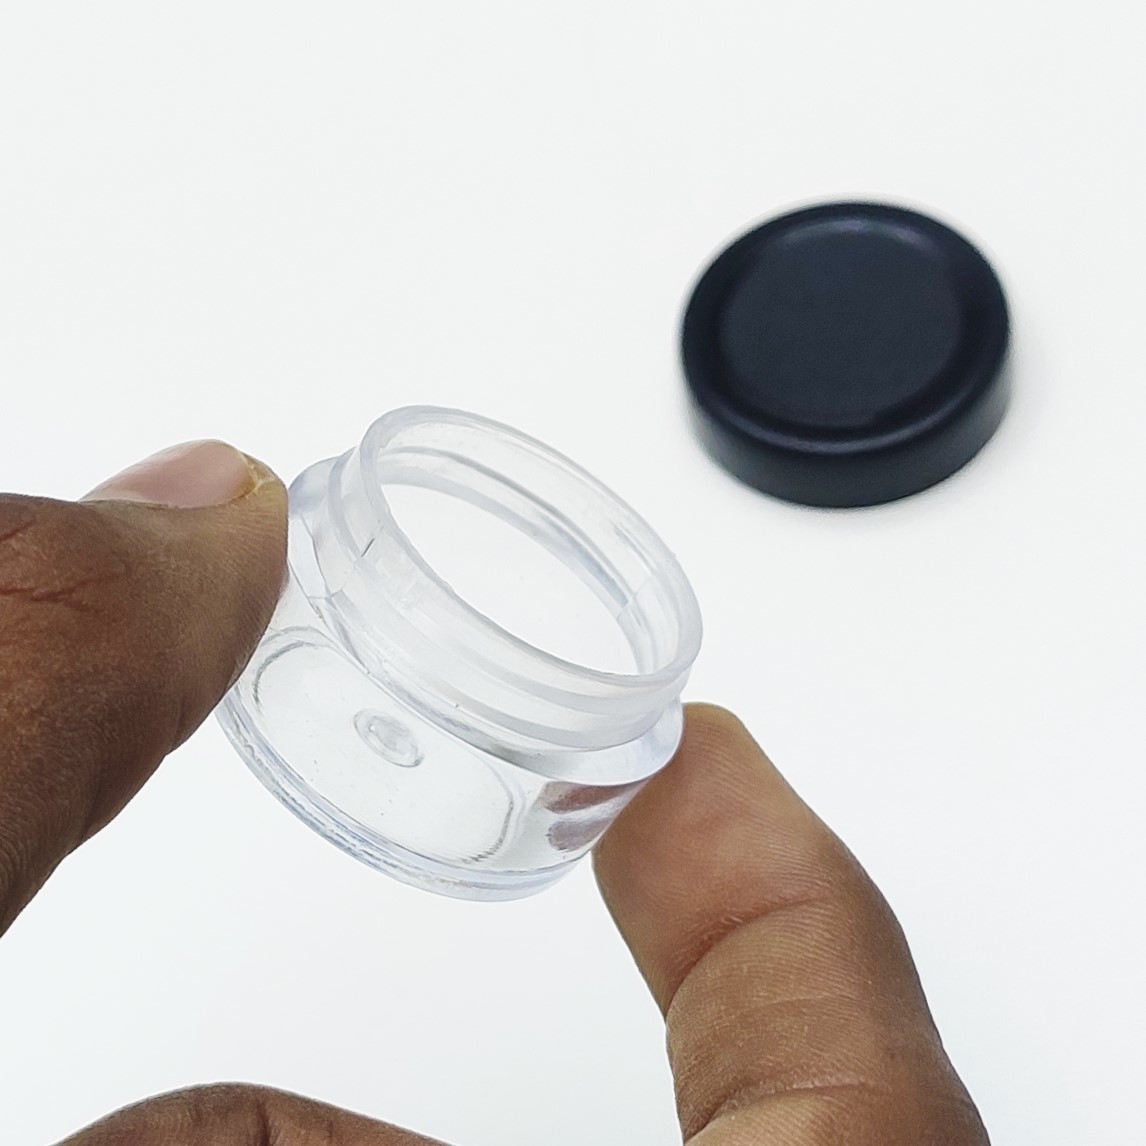 Acrylic Jar  with Black Cap